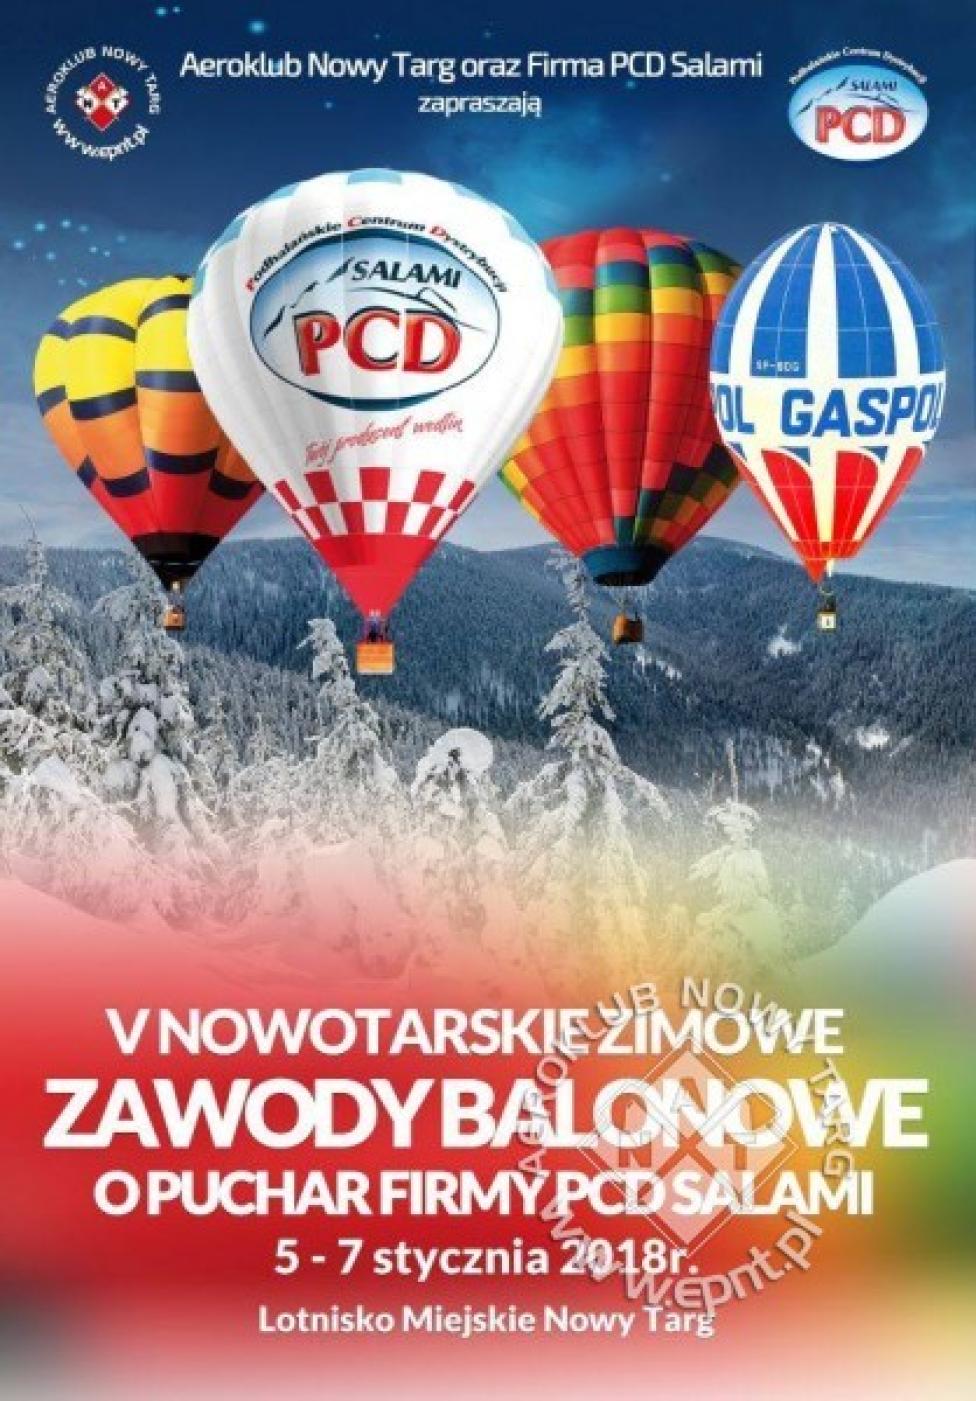 V Nowotarskie Zawody Balonowe o Puchar PCD Salami (fot. aeroklub.nowytarg.pl)